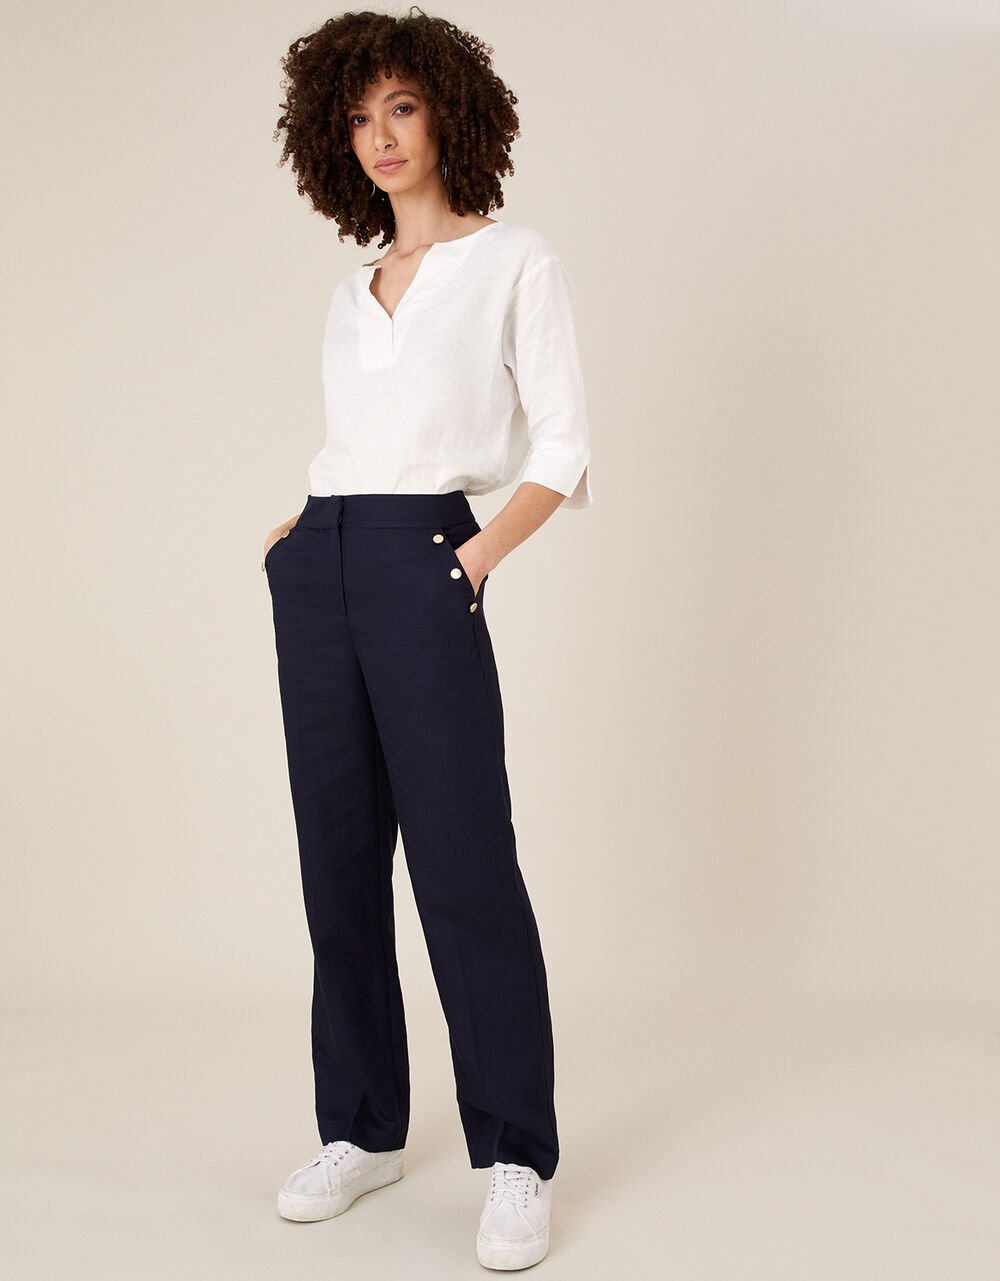 Women Women's Clothing | Smart Shorter Length Trousers in Linen Blend Blue - MT11720